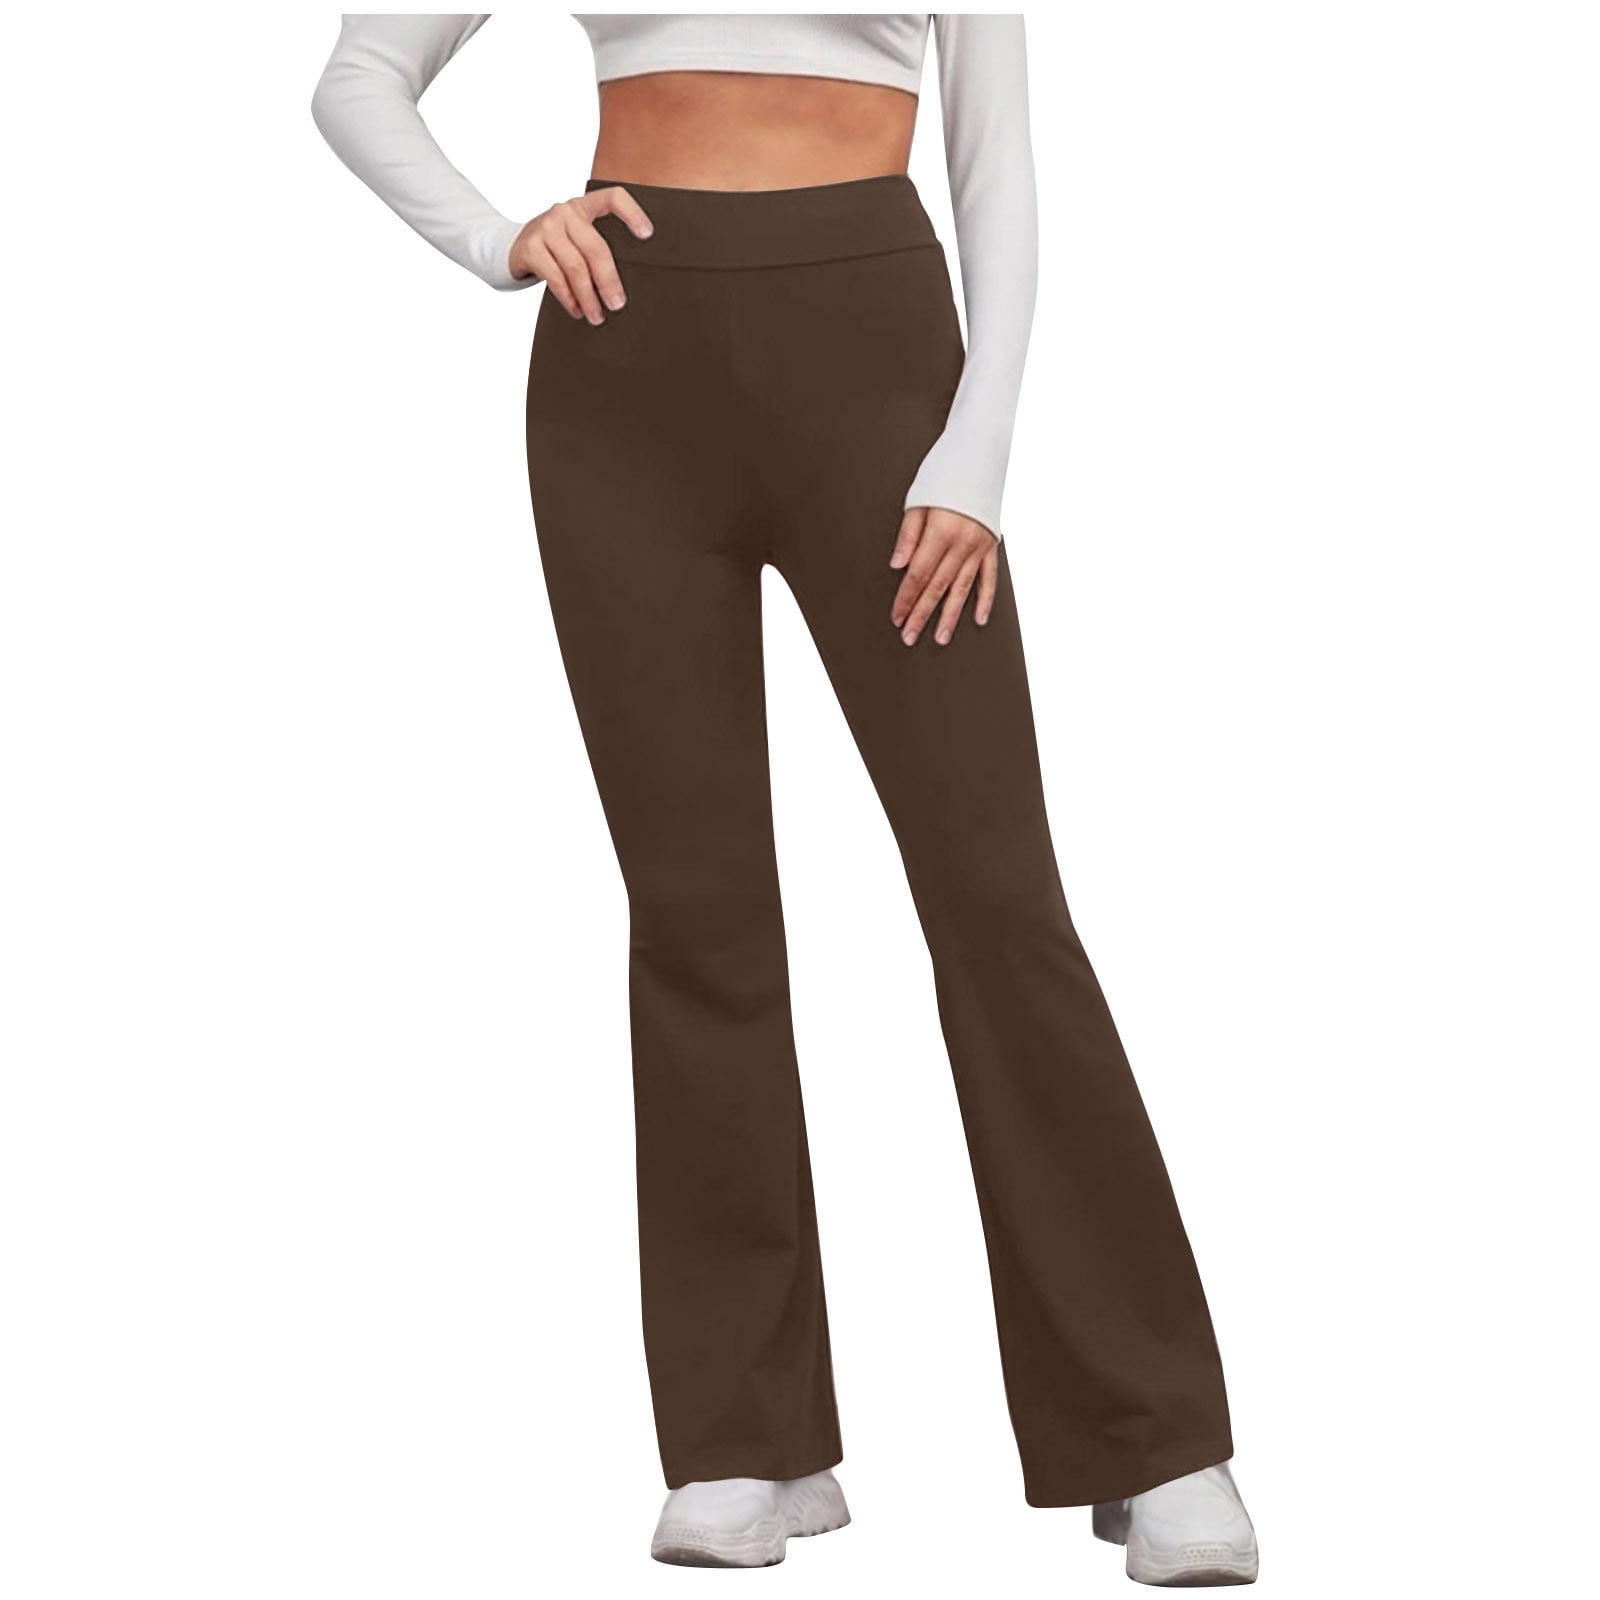  Women's Fintness Bootcut Yoga Pants High Waist Workout Bootleg  Leggings Wide Leg Athletic Pants Sweatpants (Navy, XL) : Health & Household